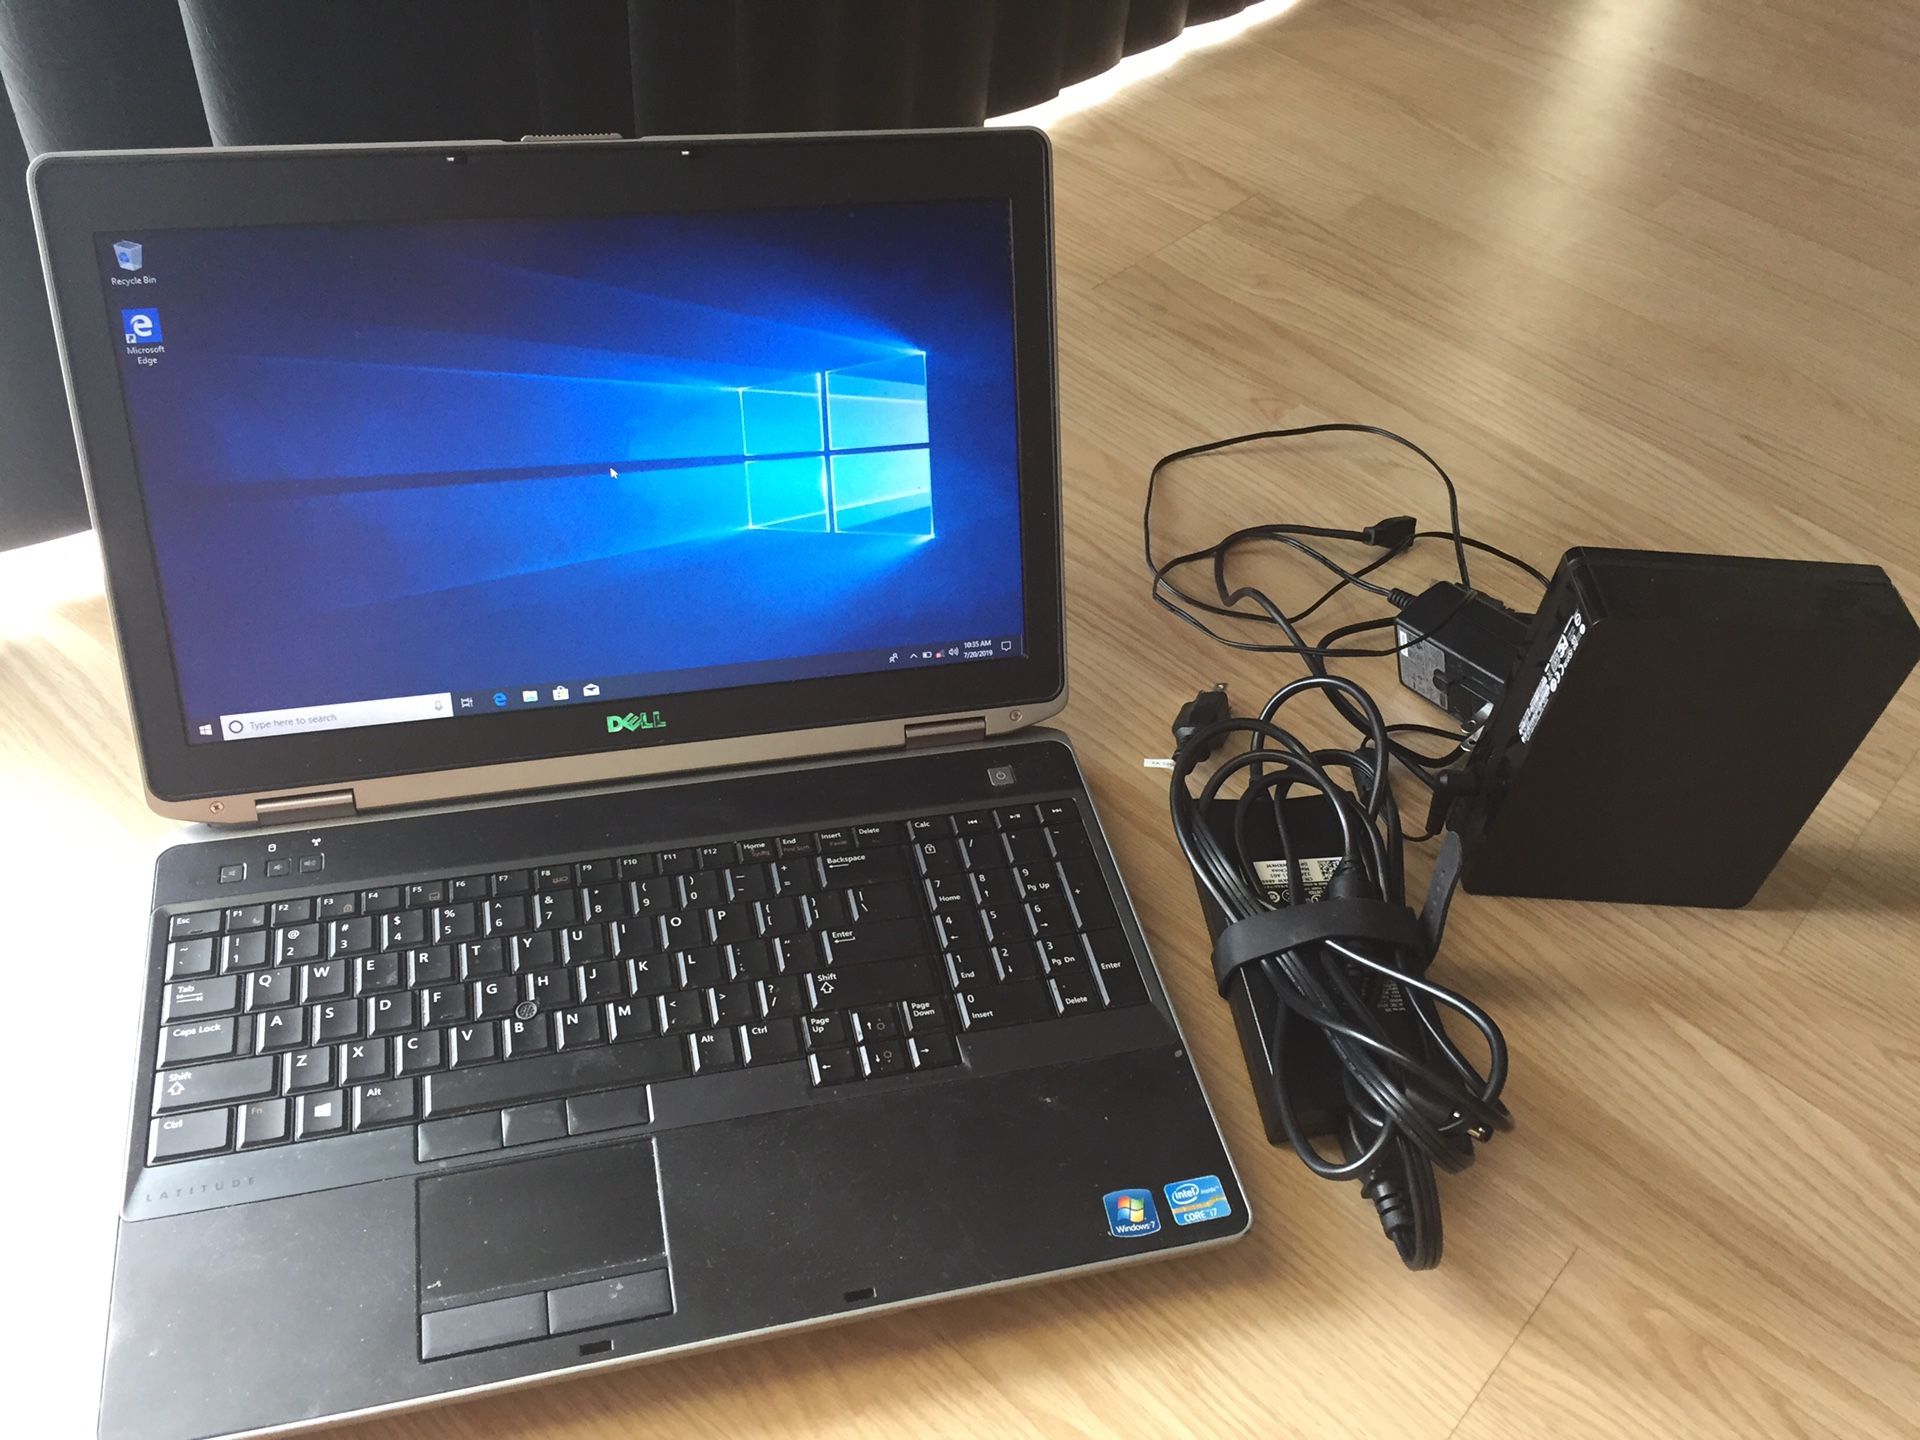 Dell latitude laptop computer + external hard drive